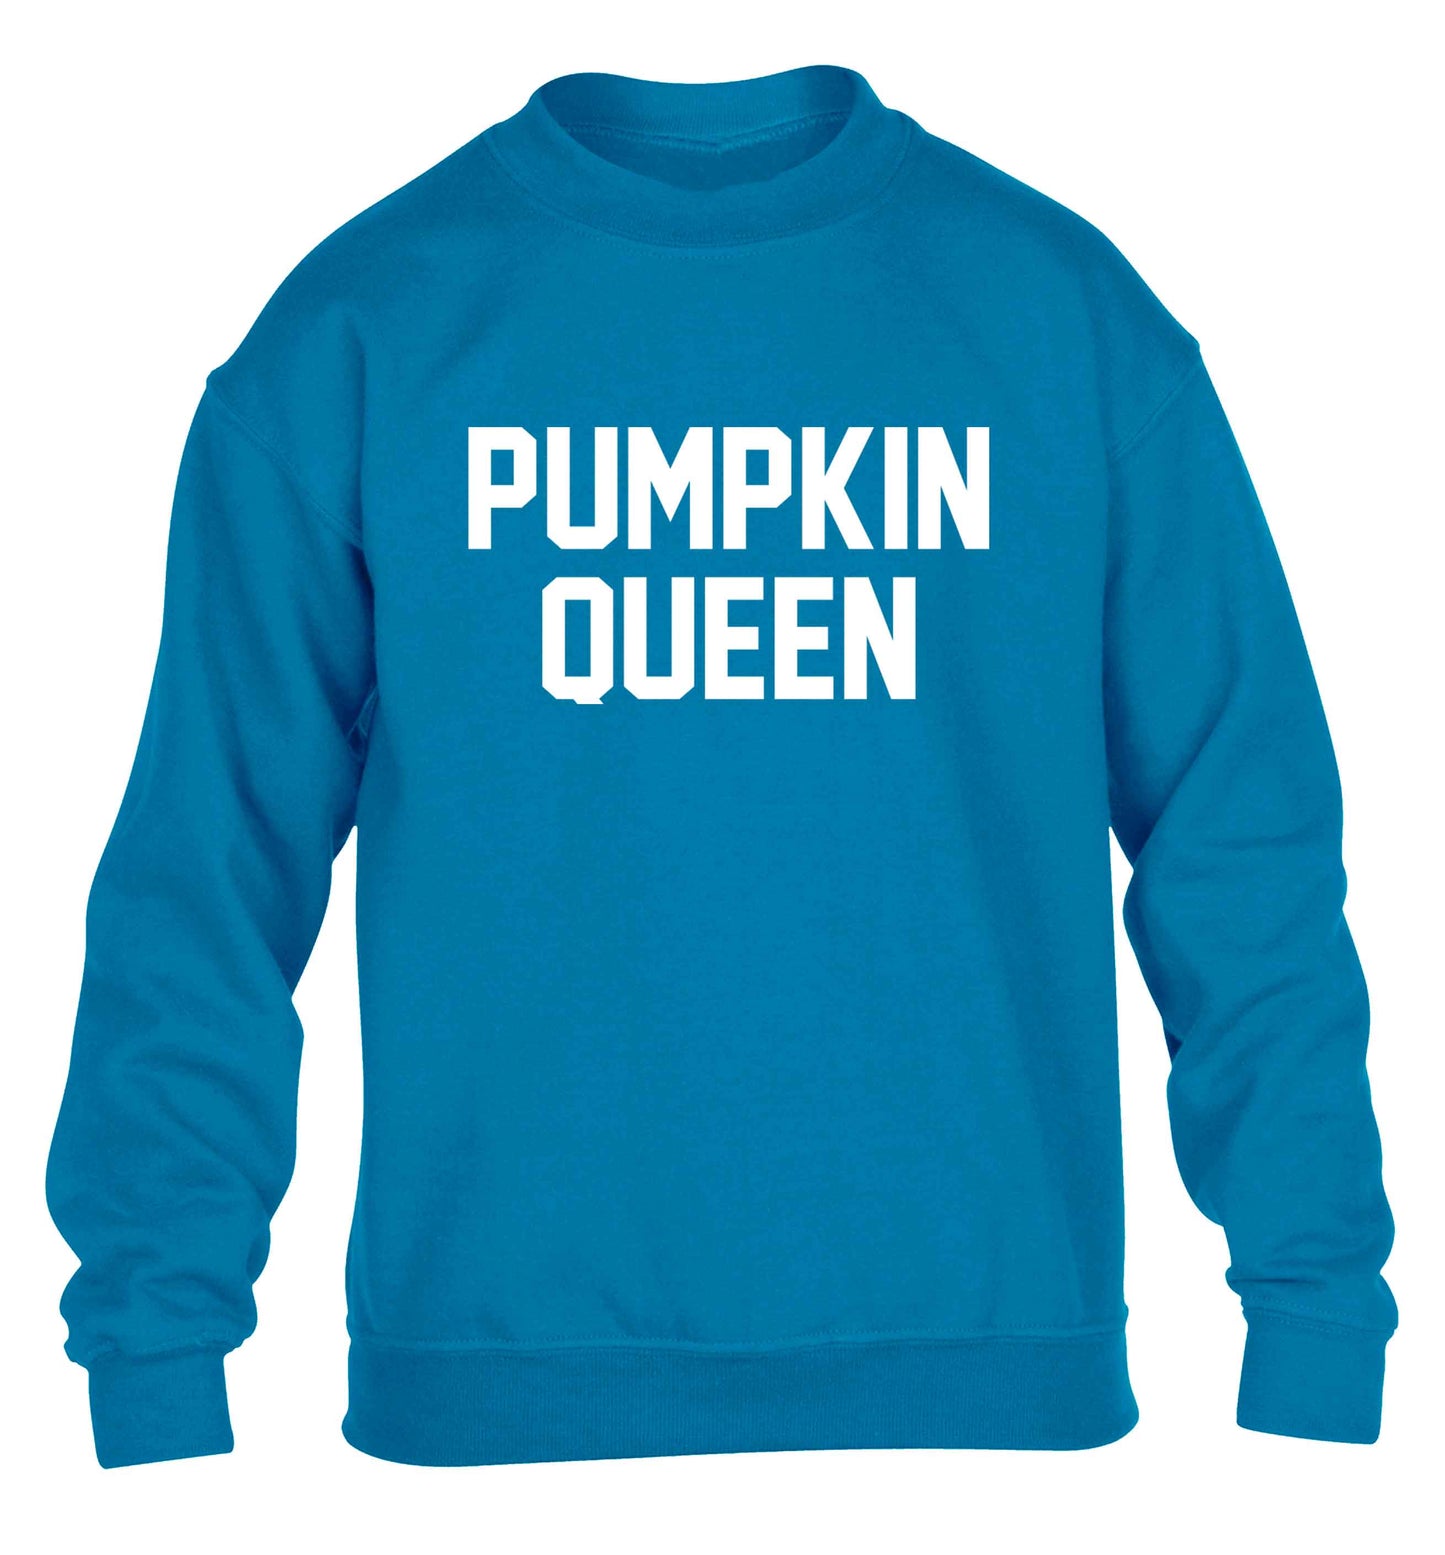 Pumpkin Queen children's blue sweater 12-13 Years